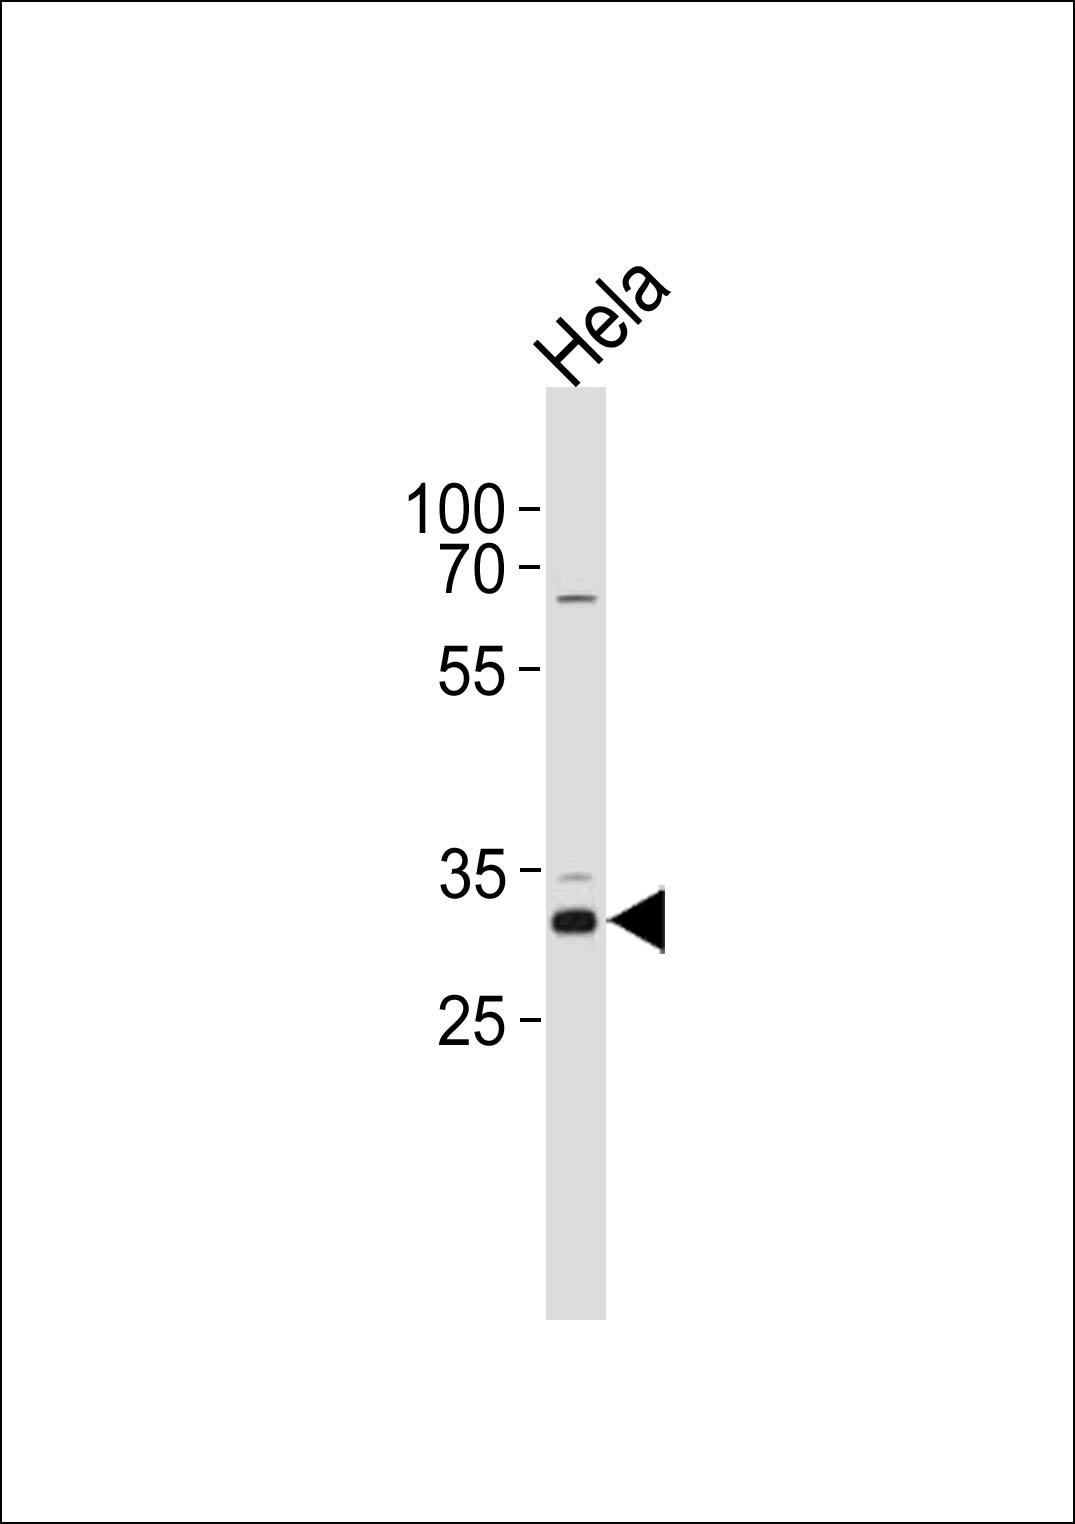 CCND1 Antibody (T288) (Cat. #AP20024b) western blot analysis in Hela cell line lysates (35ug/lane).This demonstrates the CCND1 antibody detected the CCND1 protein (arrow).